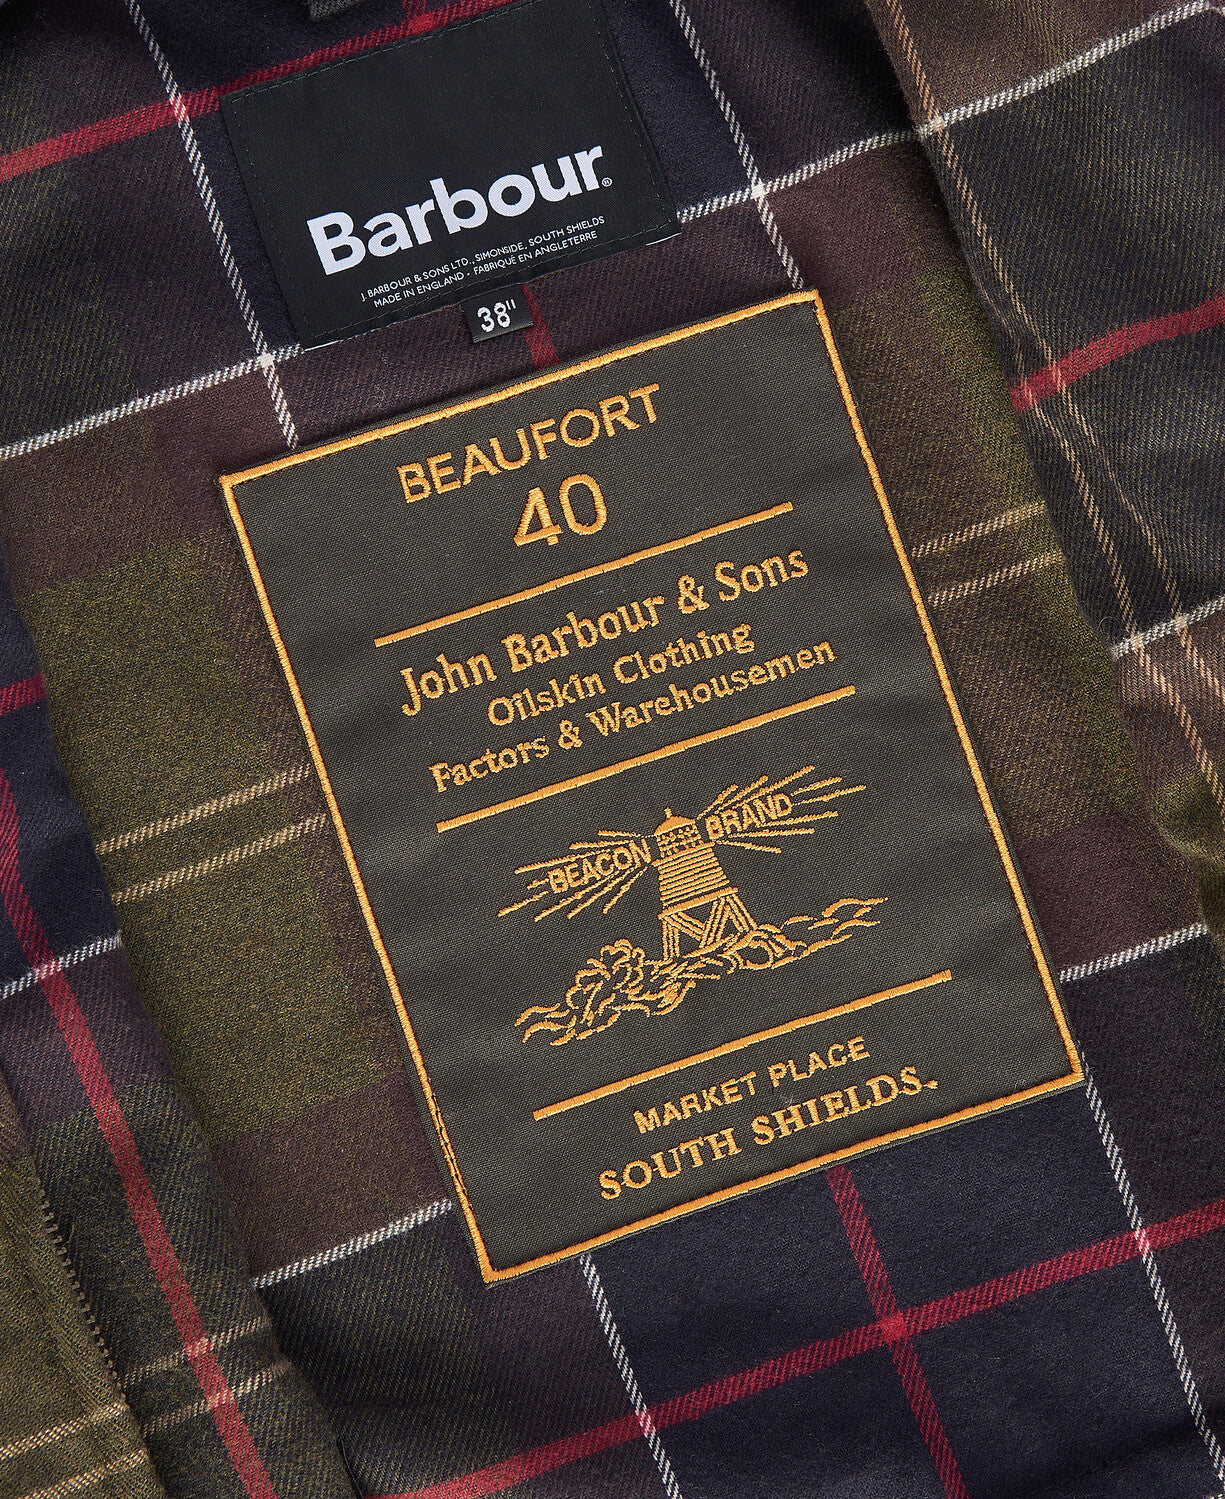 Barbour Beaufort 40th Anniversary Wax Jacket